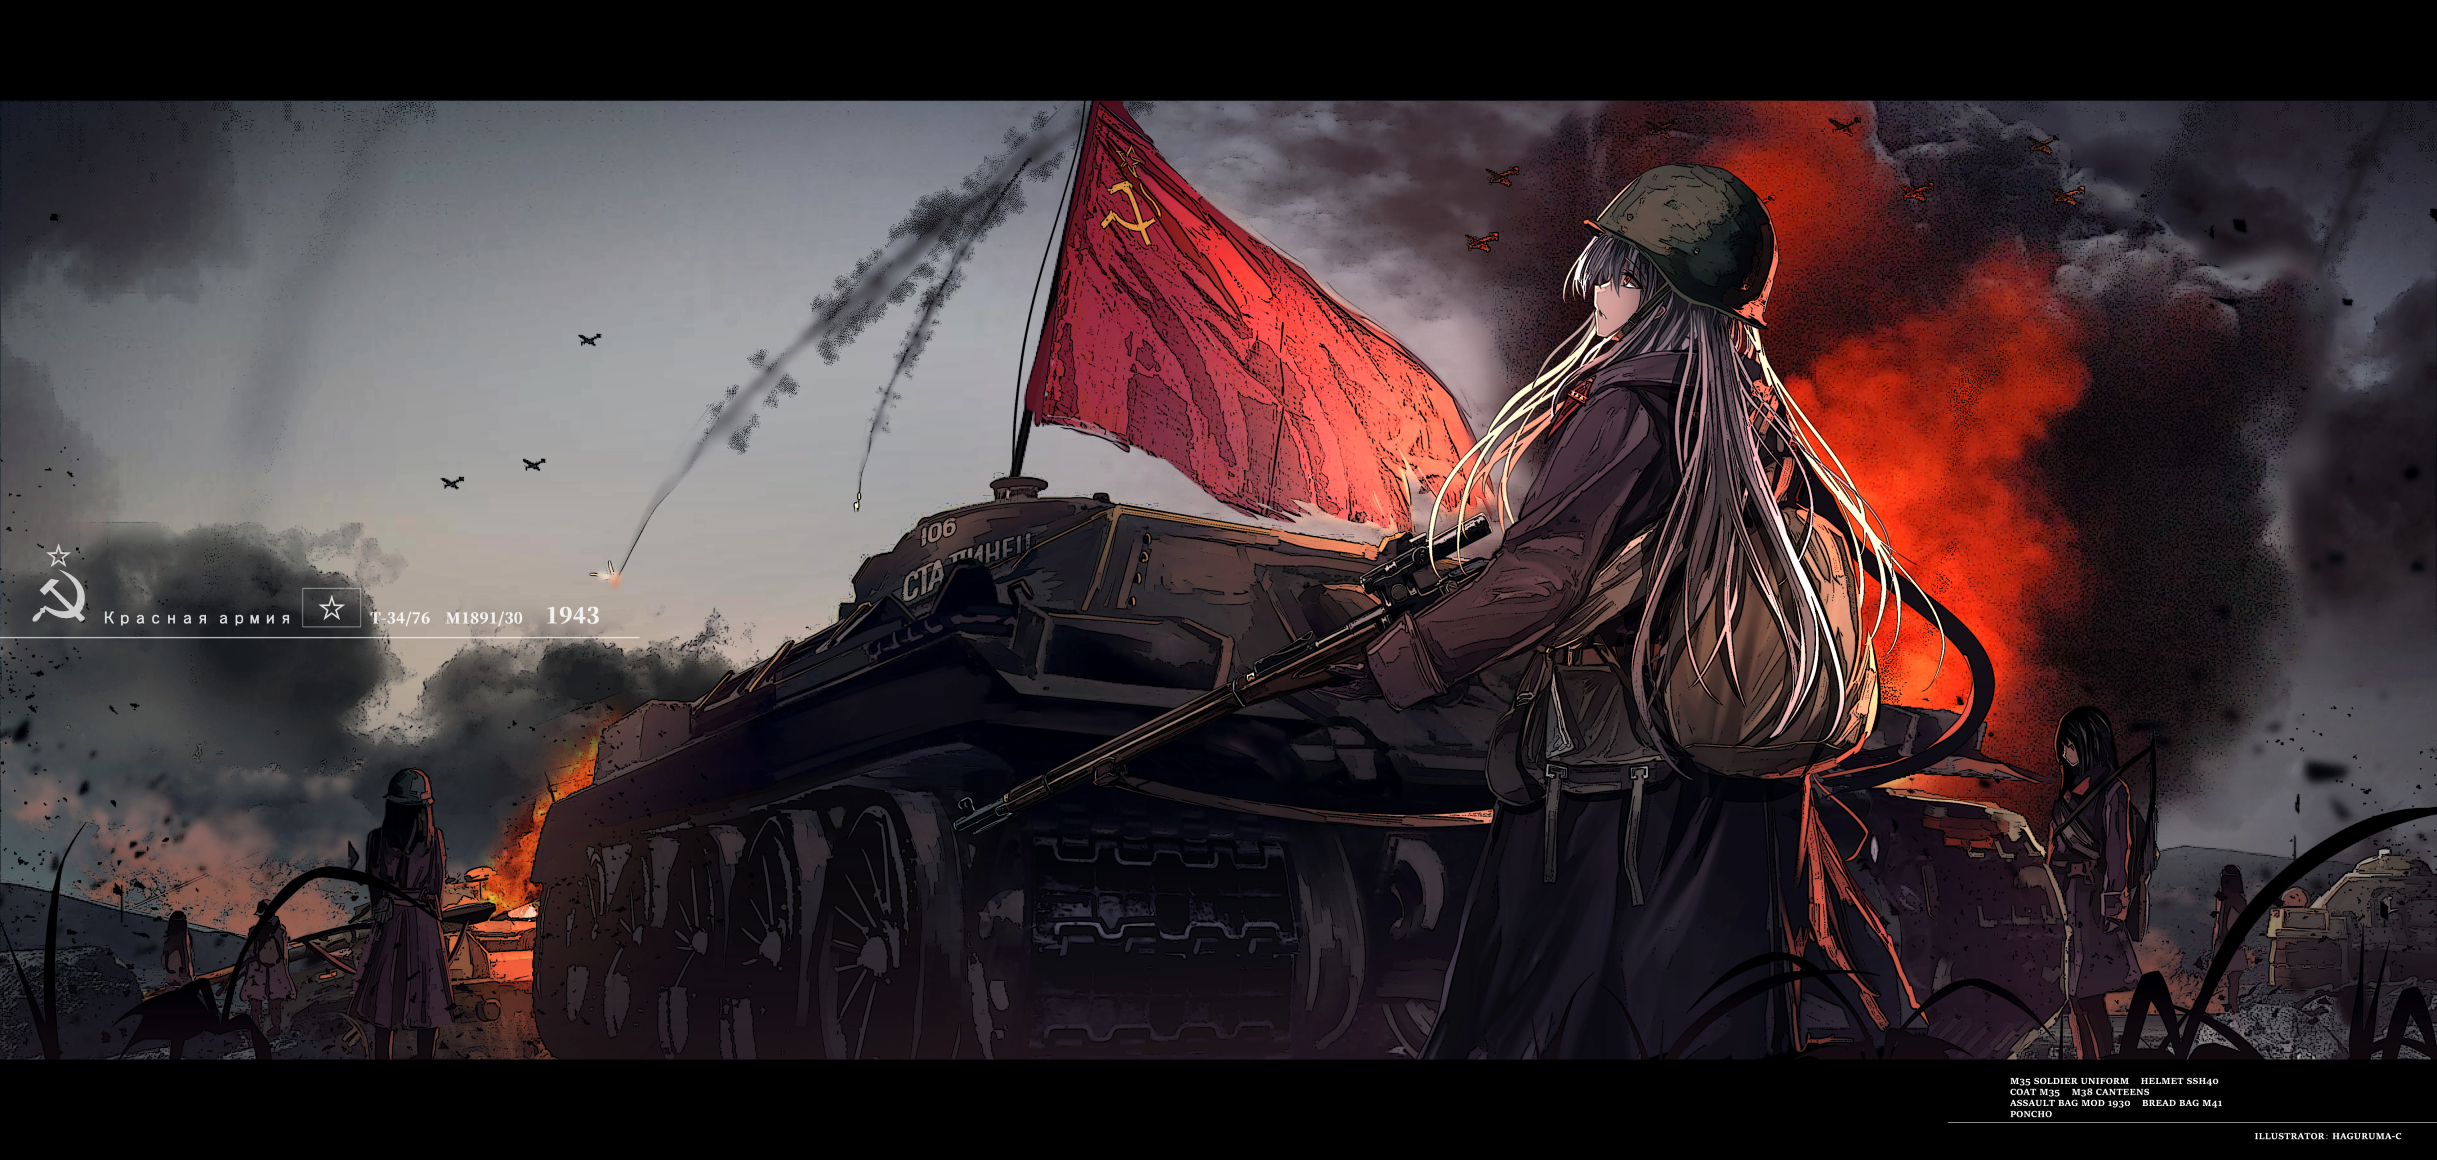 ussr #sovietunion #anime #military #army | TikTok